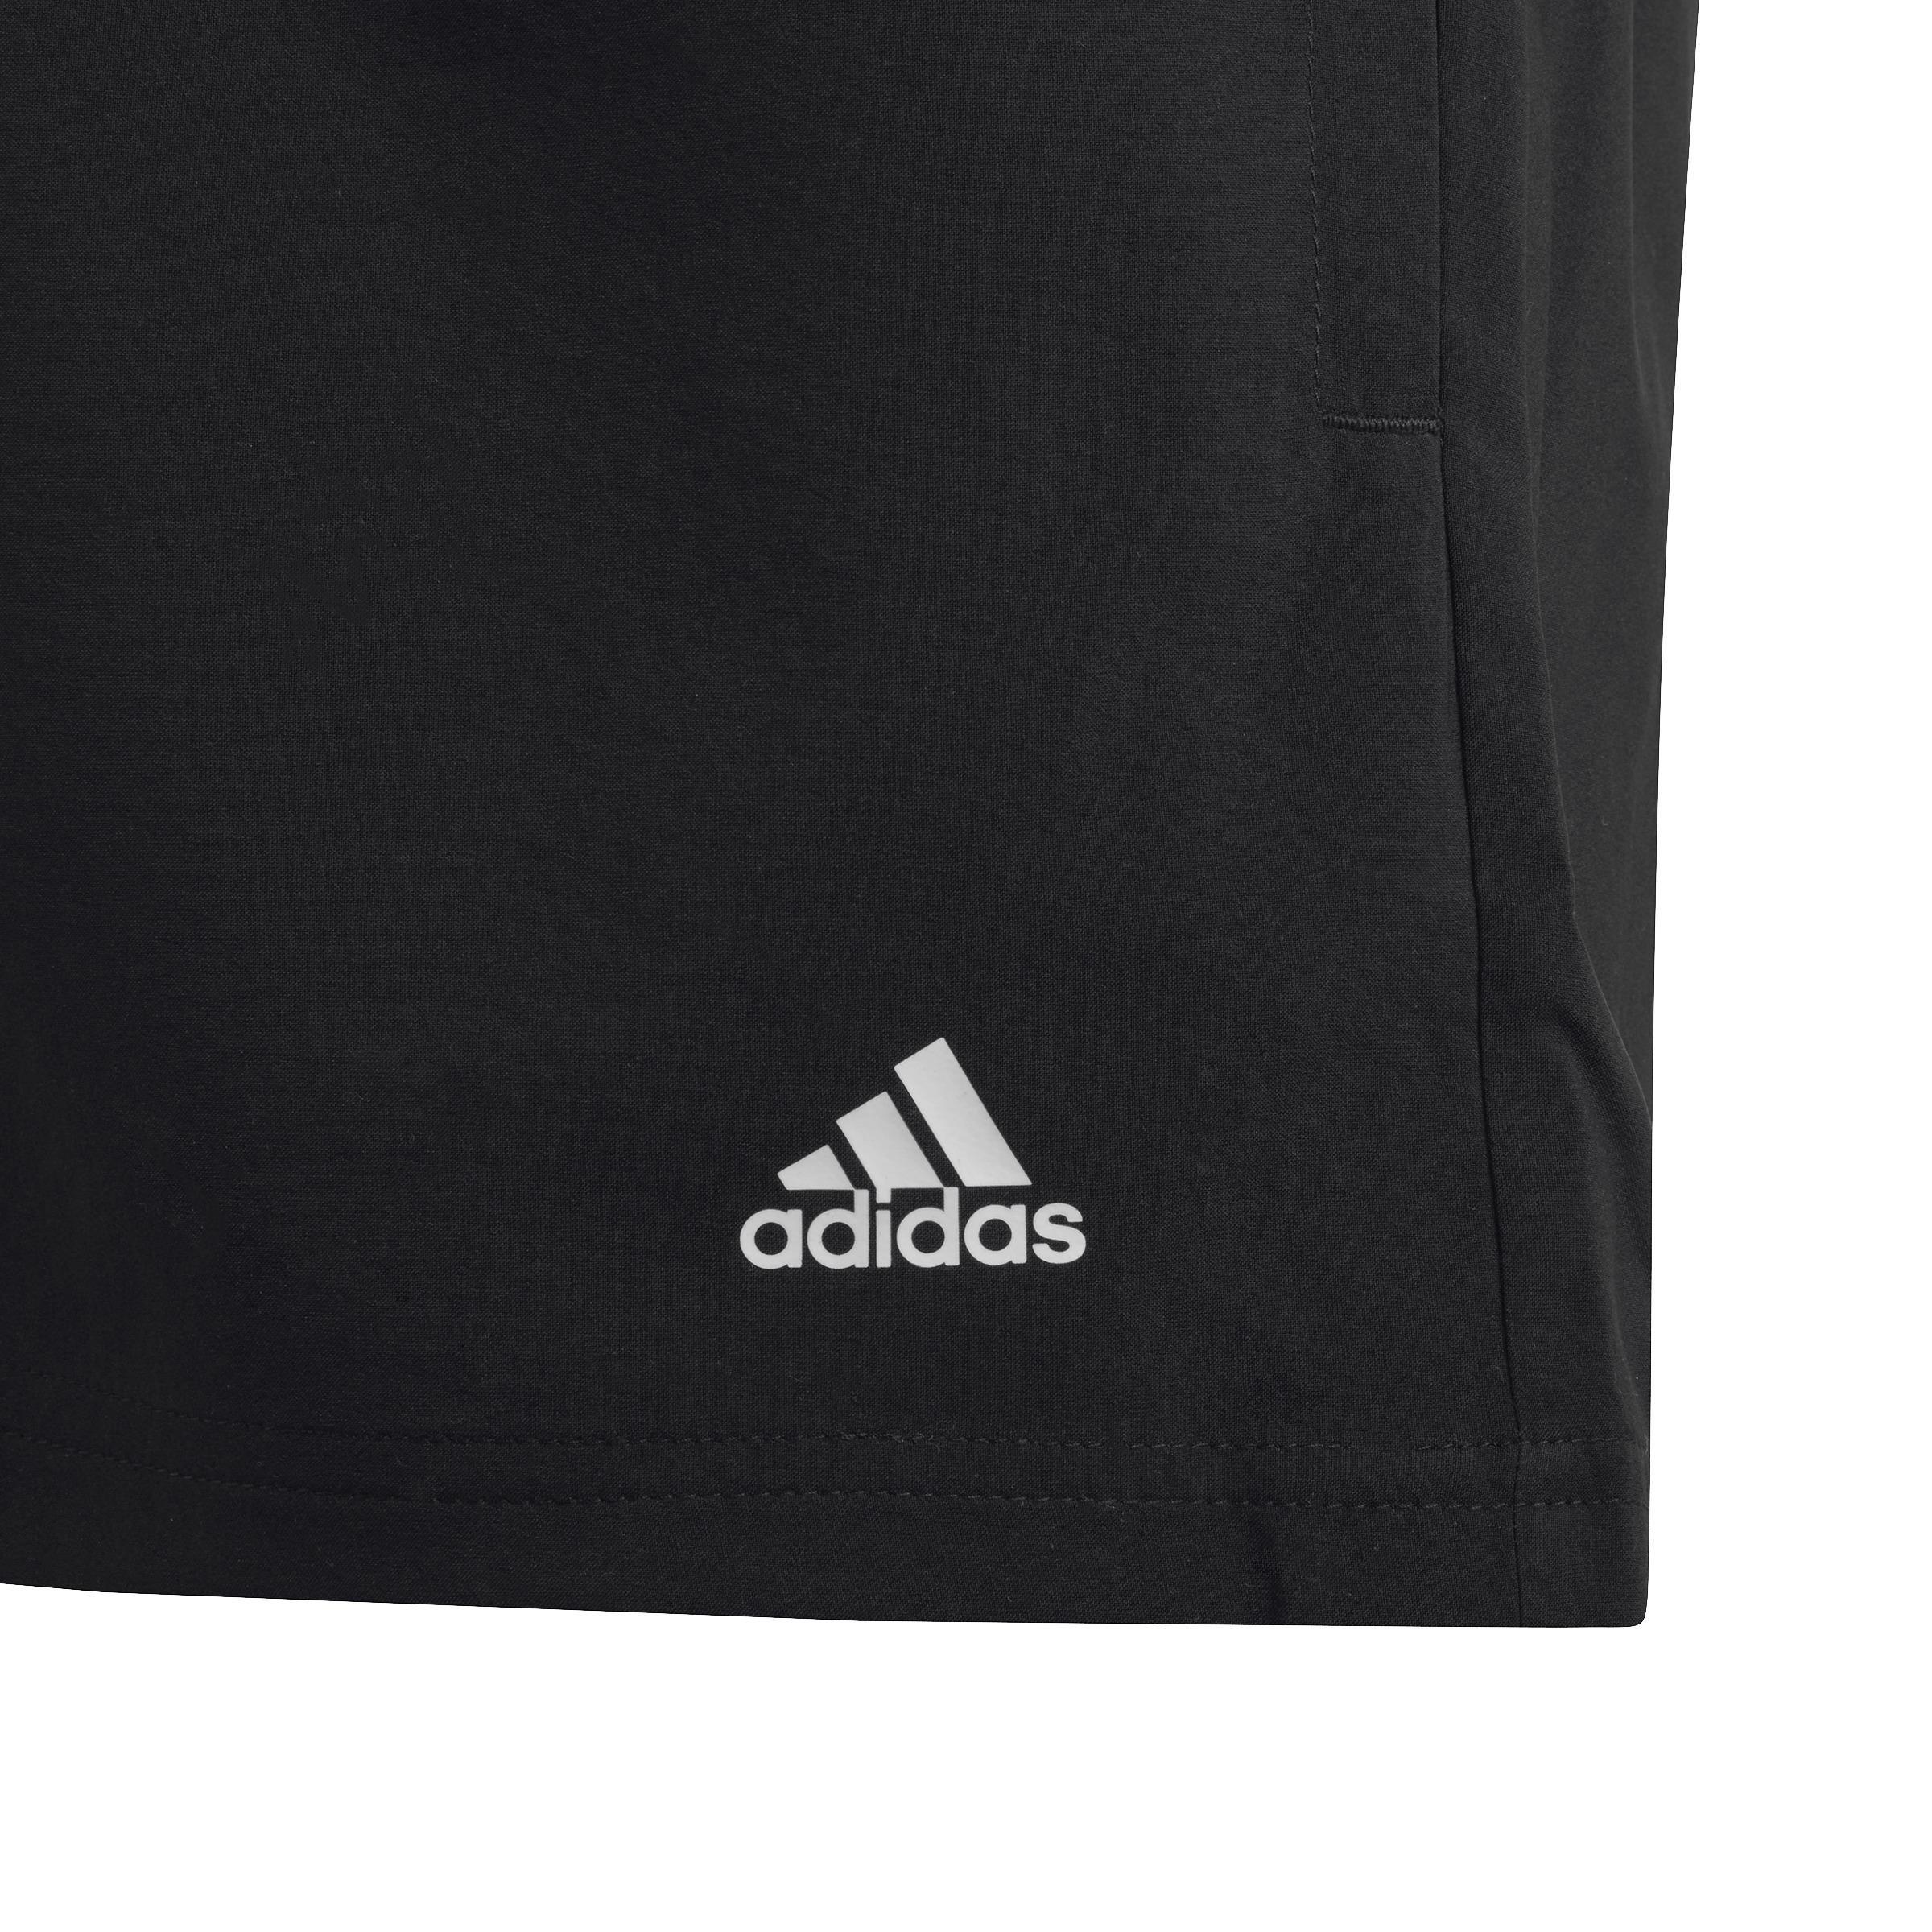 adidas - Kids Unisex Essentials Small Logo Chelsea Shorts, Black